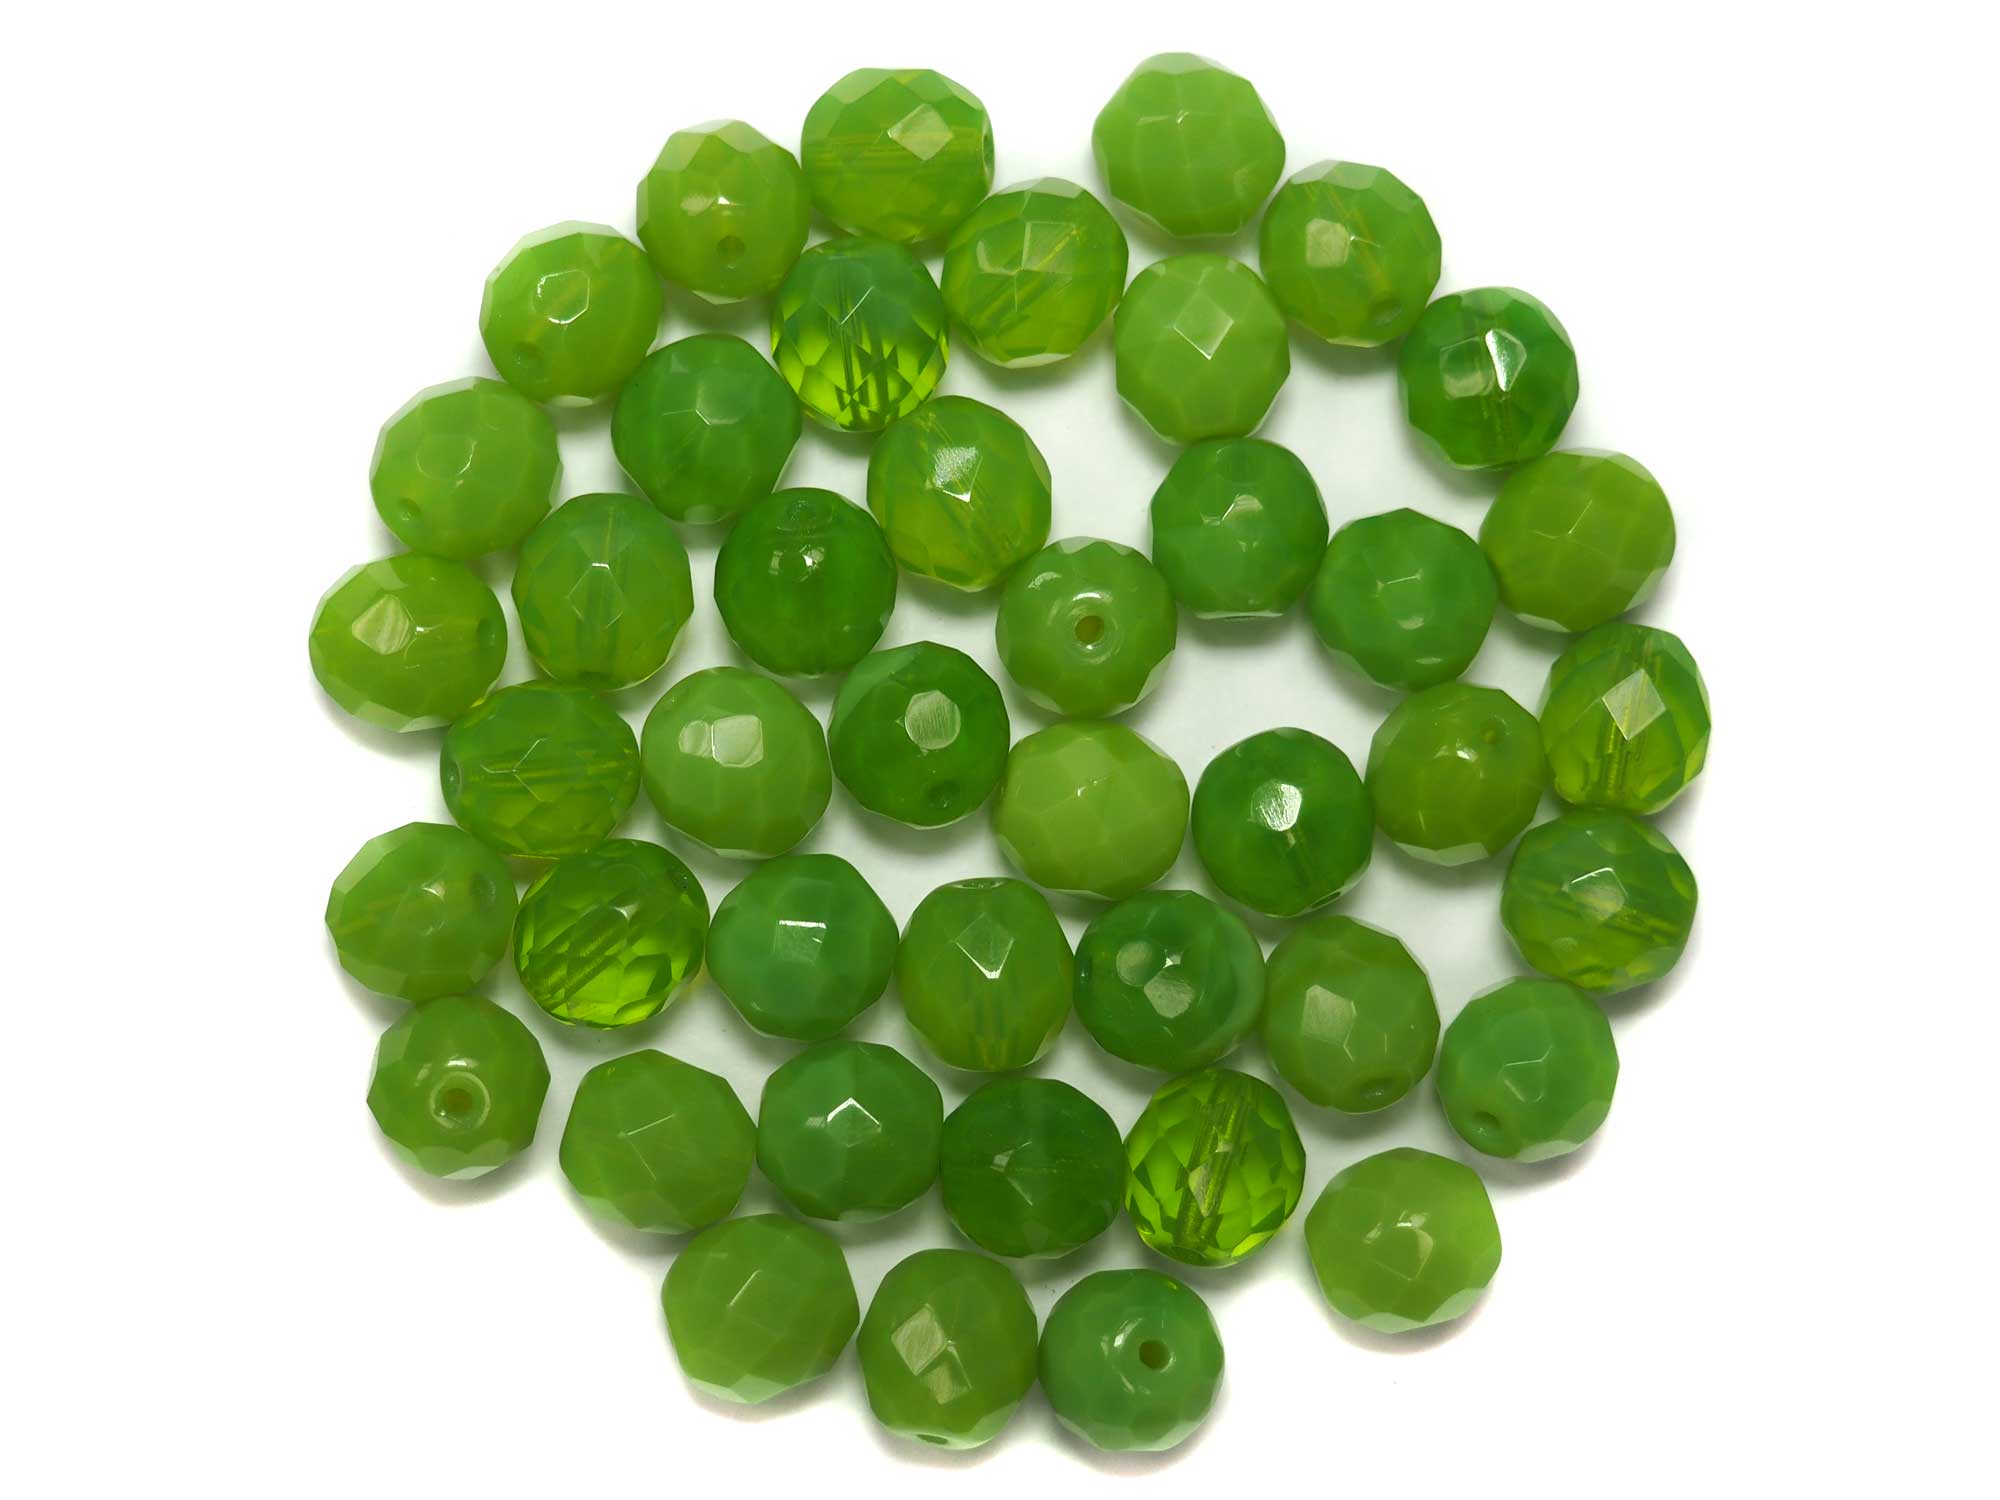 Light Green Opal Mix, Czech Fire Polished Round Faceted Glass Beads, 10mm 24pcs, P508